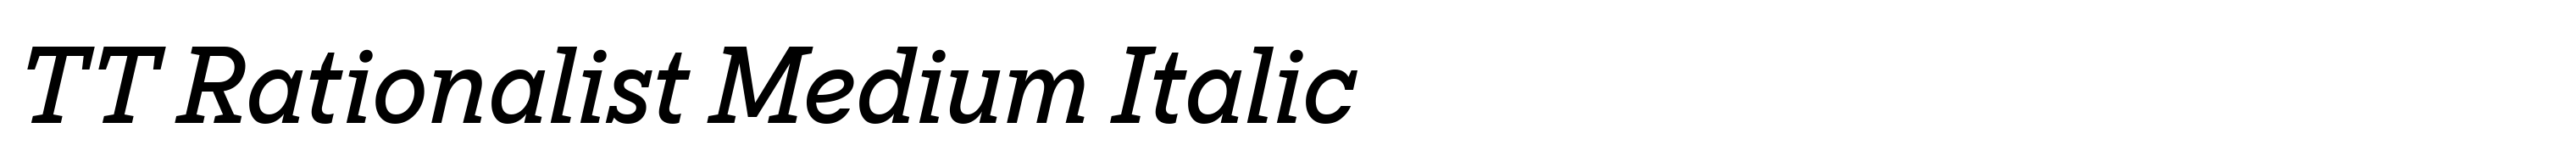 TT Rationalist Medium Italic